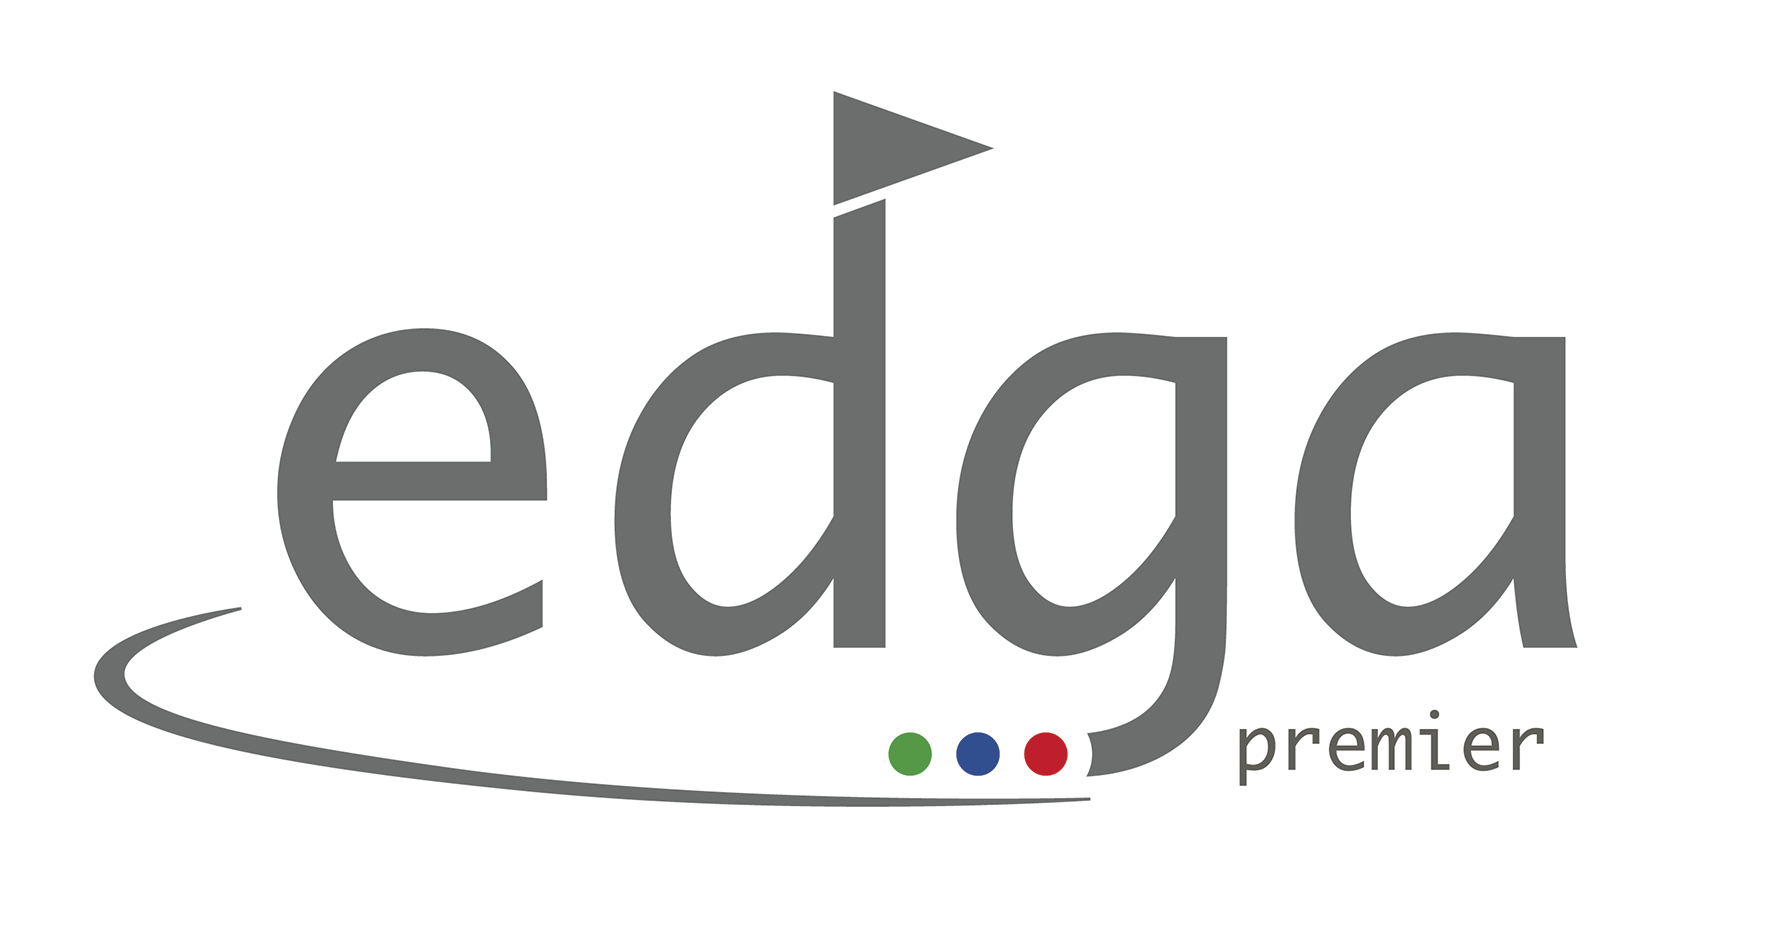 edga logo premier serie